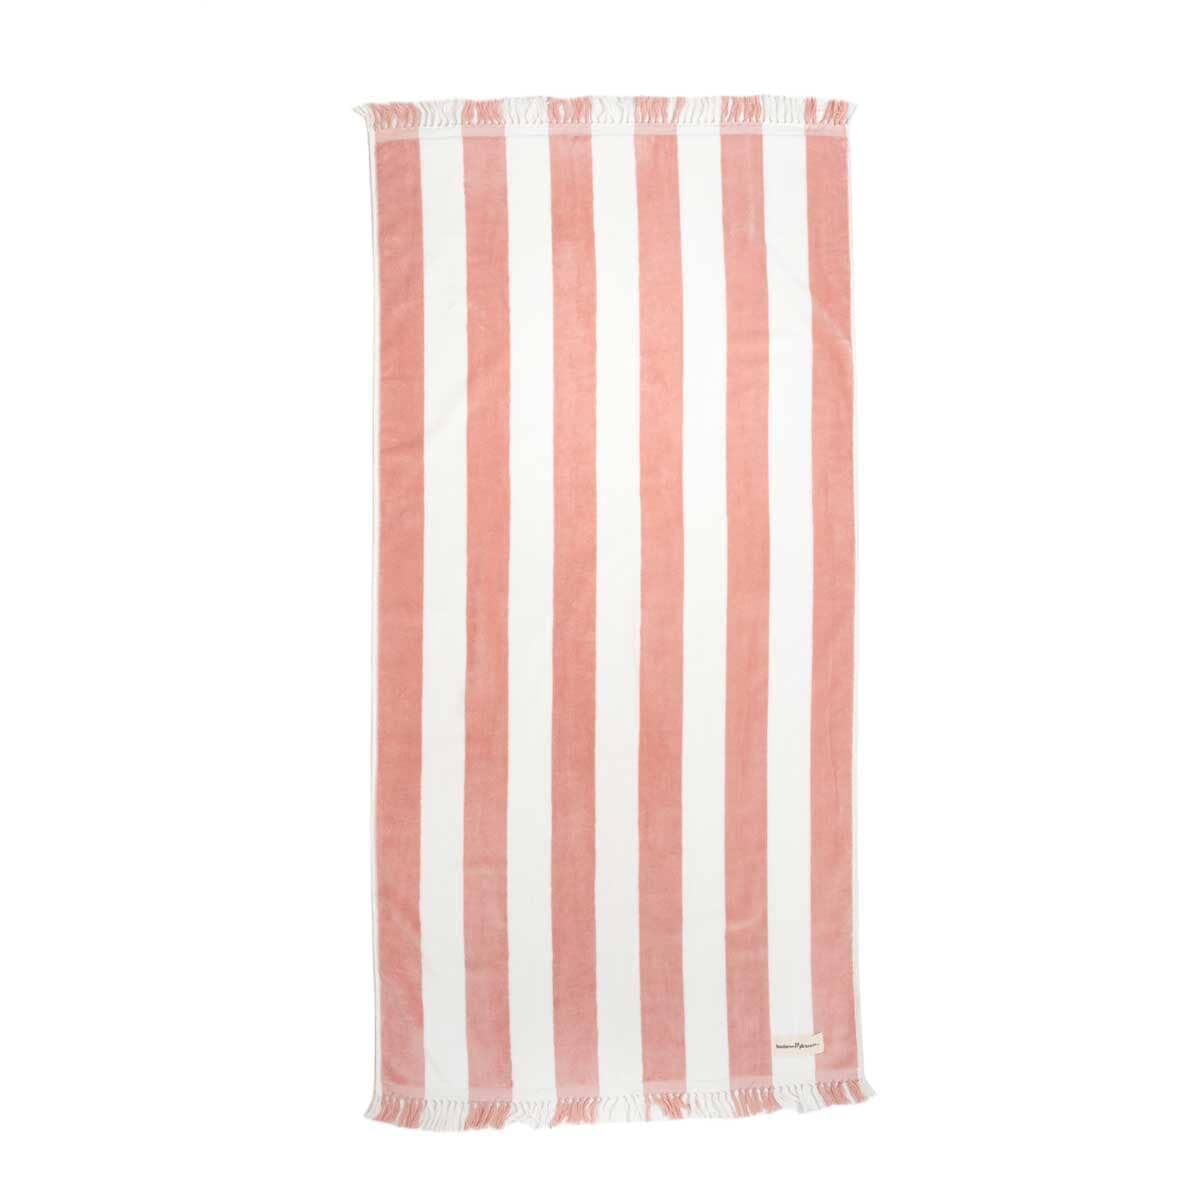 studio shot of pink capri holiday beach towel